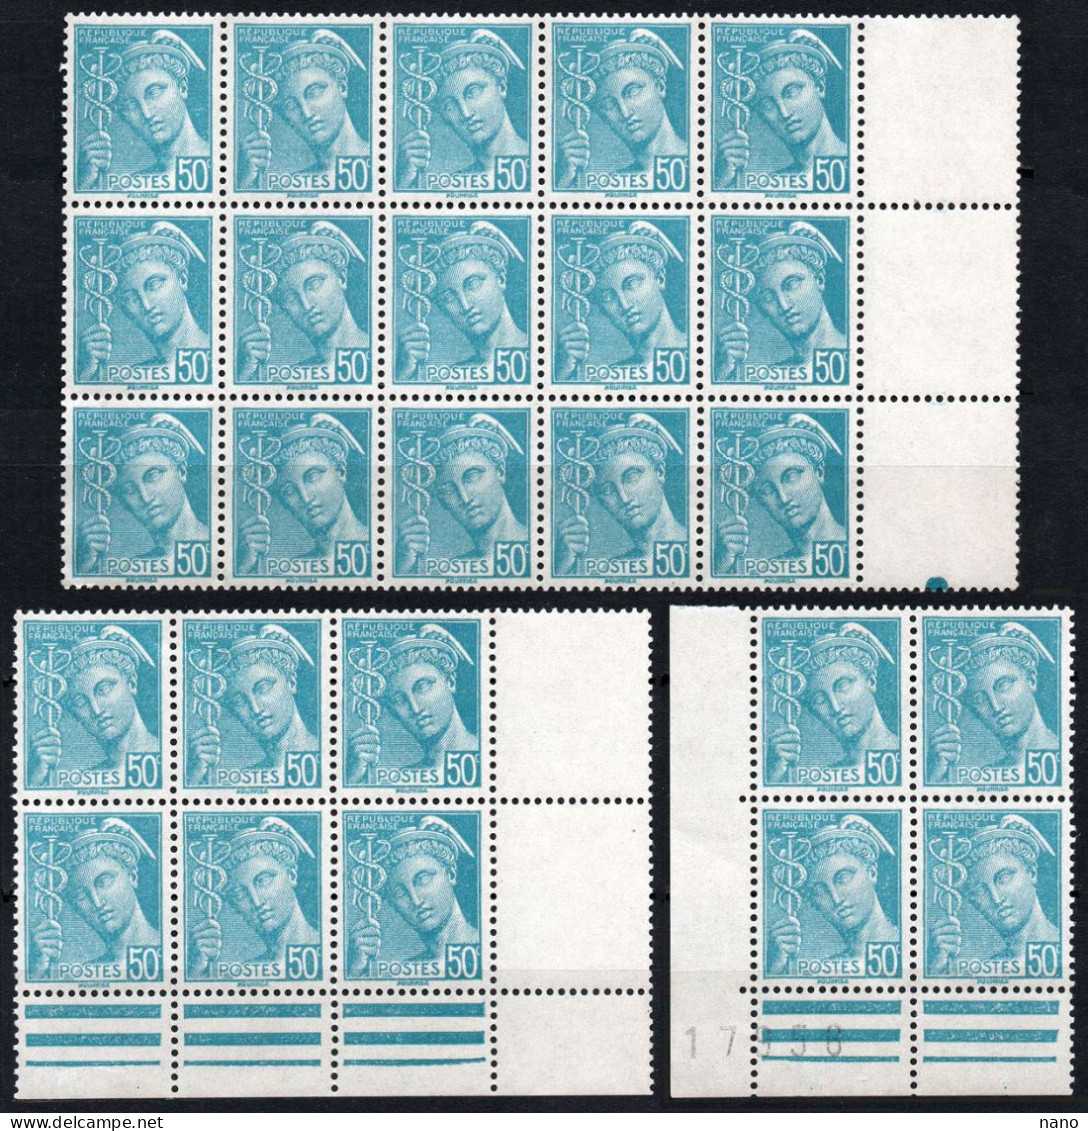 Y&T N° 538 - 50 C. Turquoise - Type Mercure - Année 1942 - 3 Blocs - Neuf ** - 1938-42 Mercurius